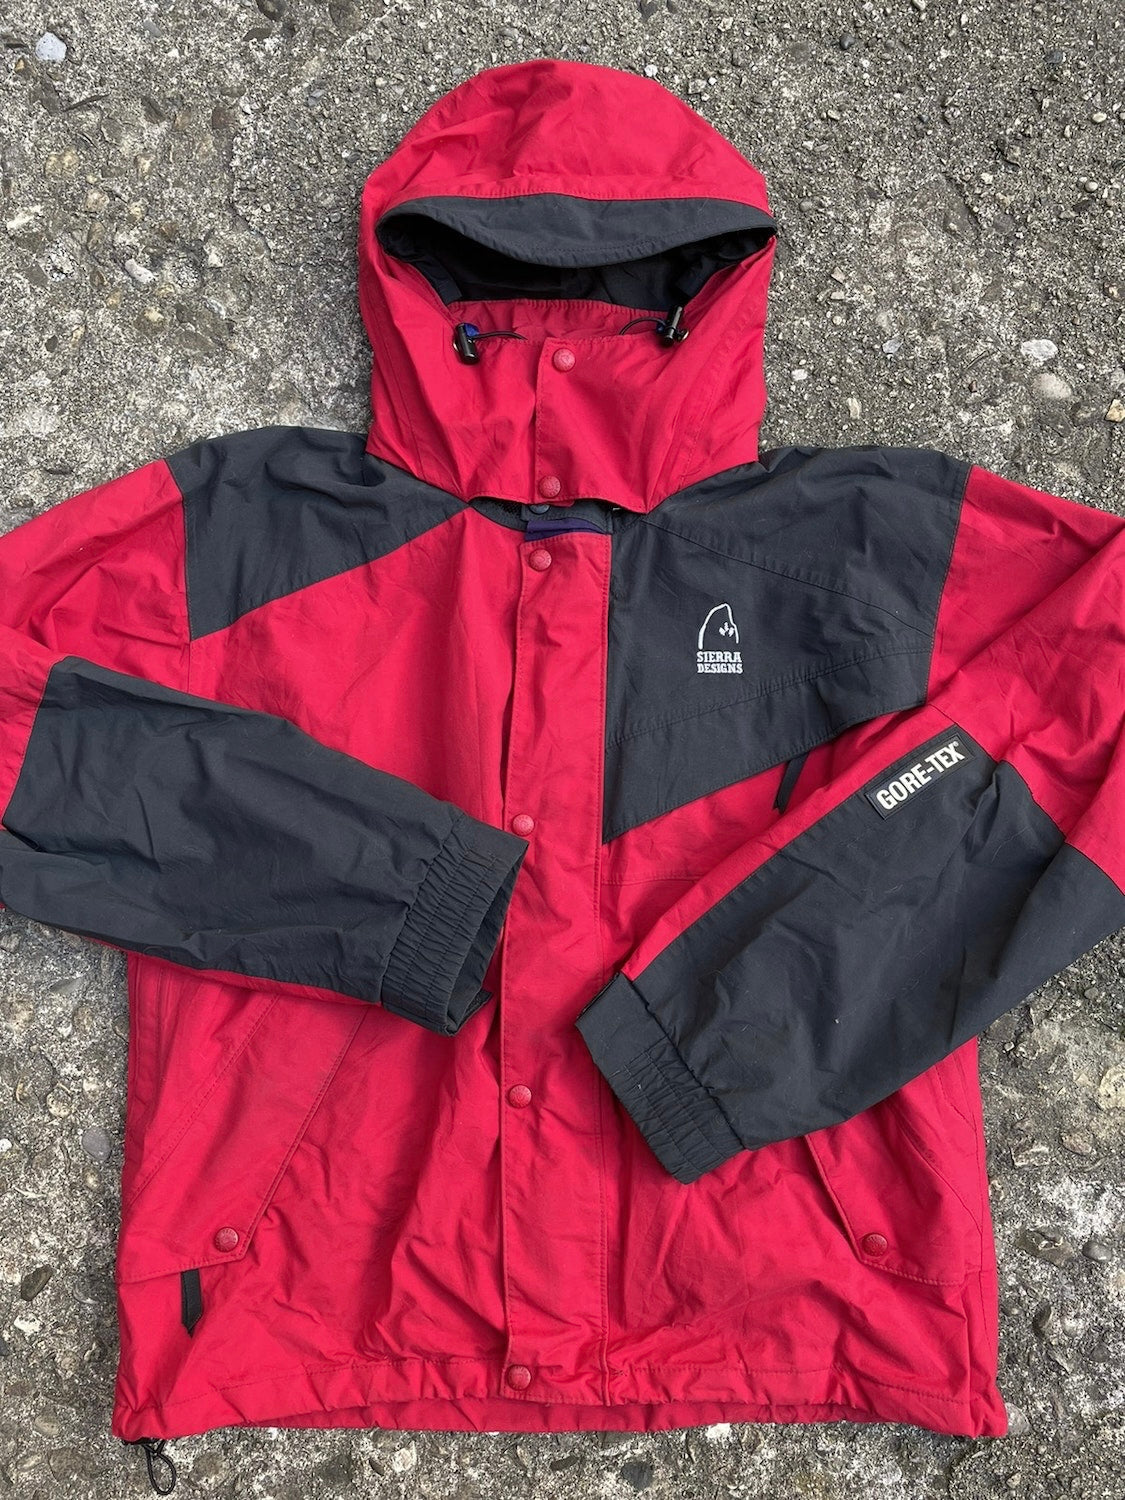 1990's Sierra Designs Goretex Shell Jacket - M